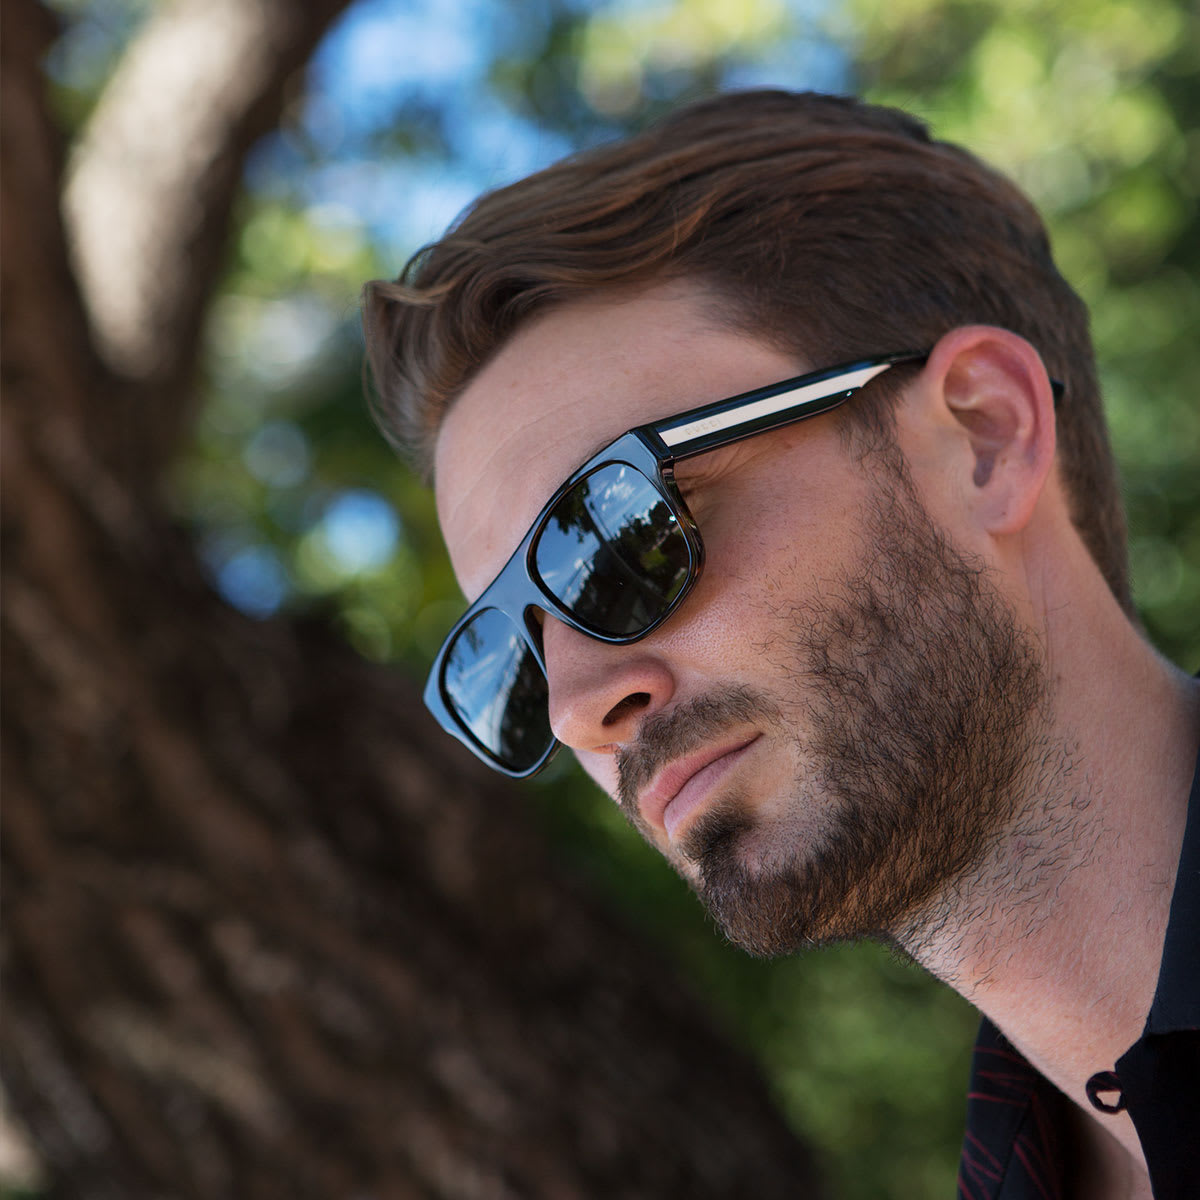 Trending sunglasses styles for men to wear in Summer 2019